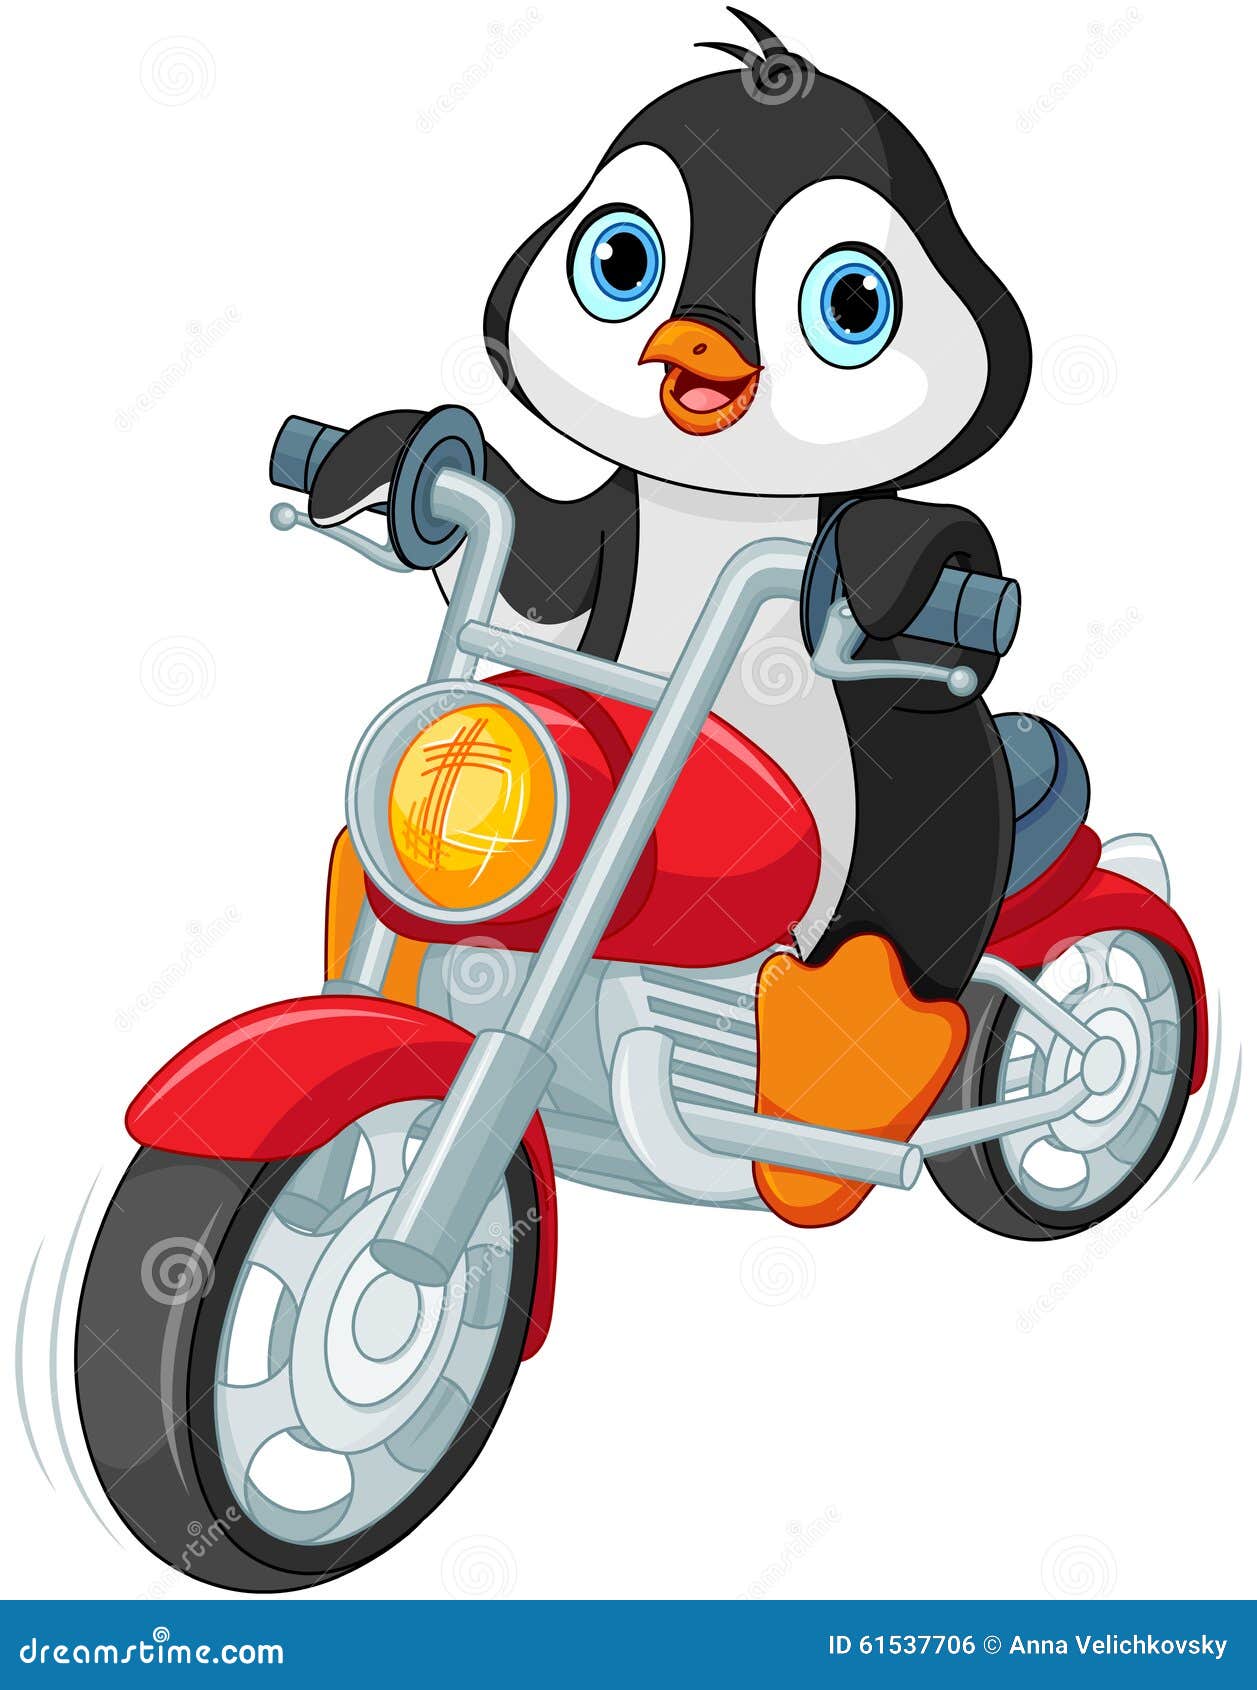 penguin motorcyclist